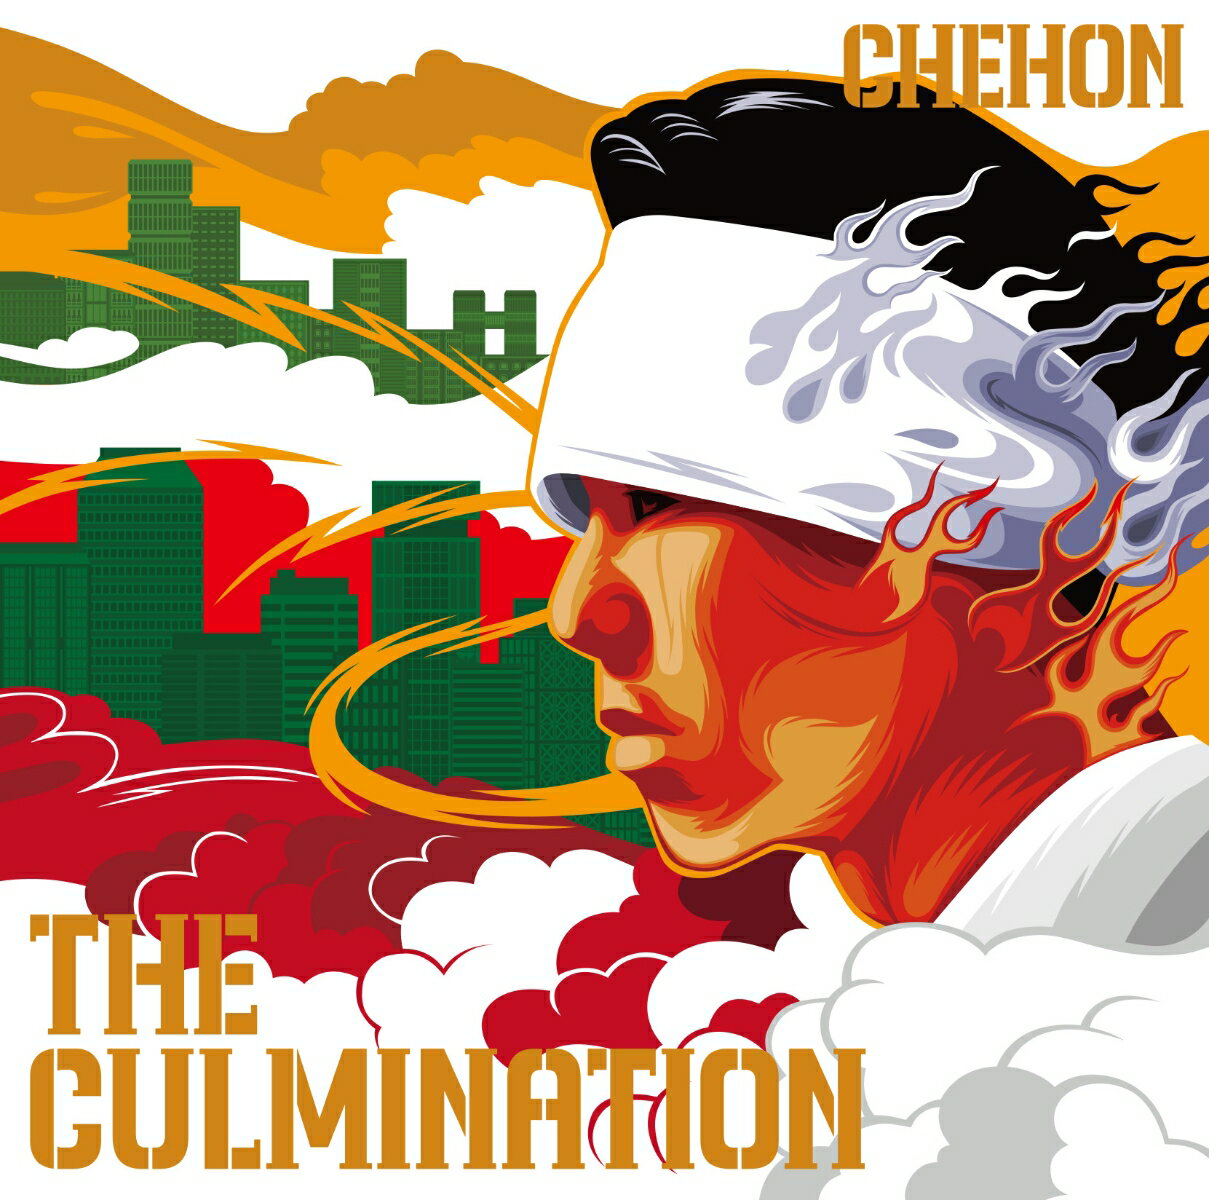 THE CULMINATION [ CHEHON ]